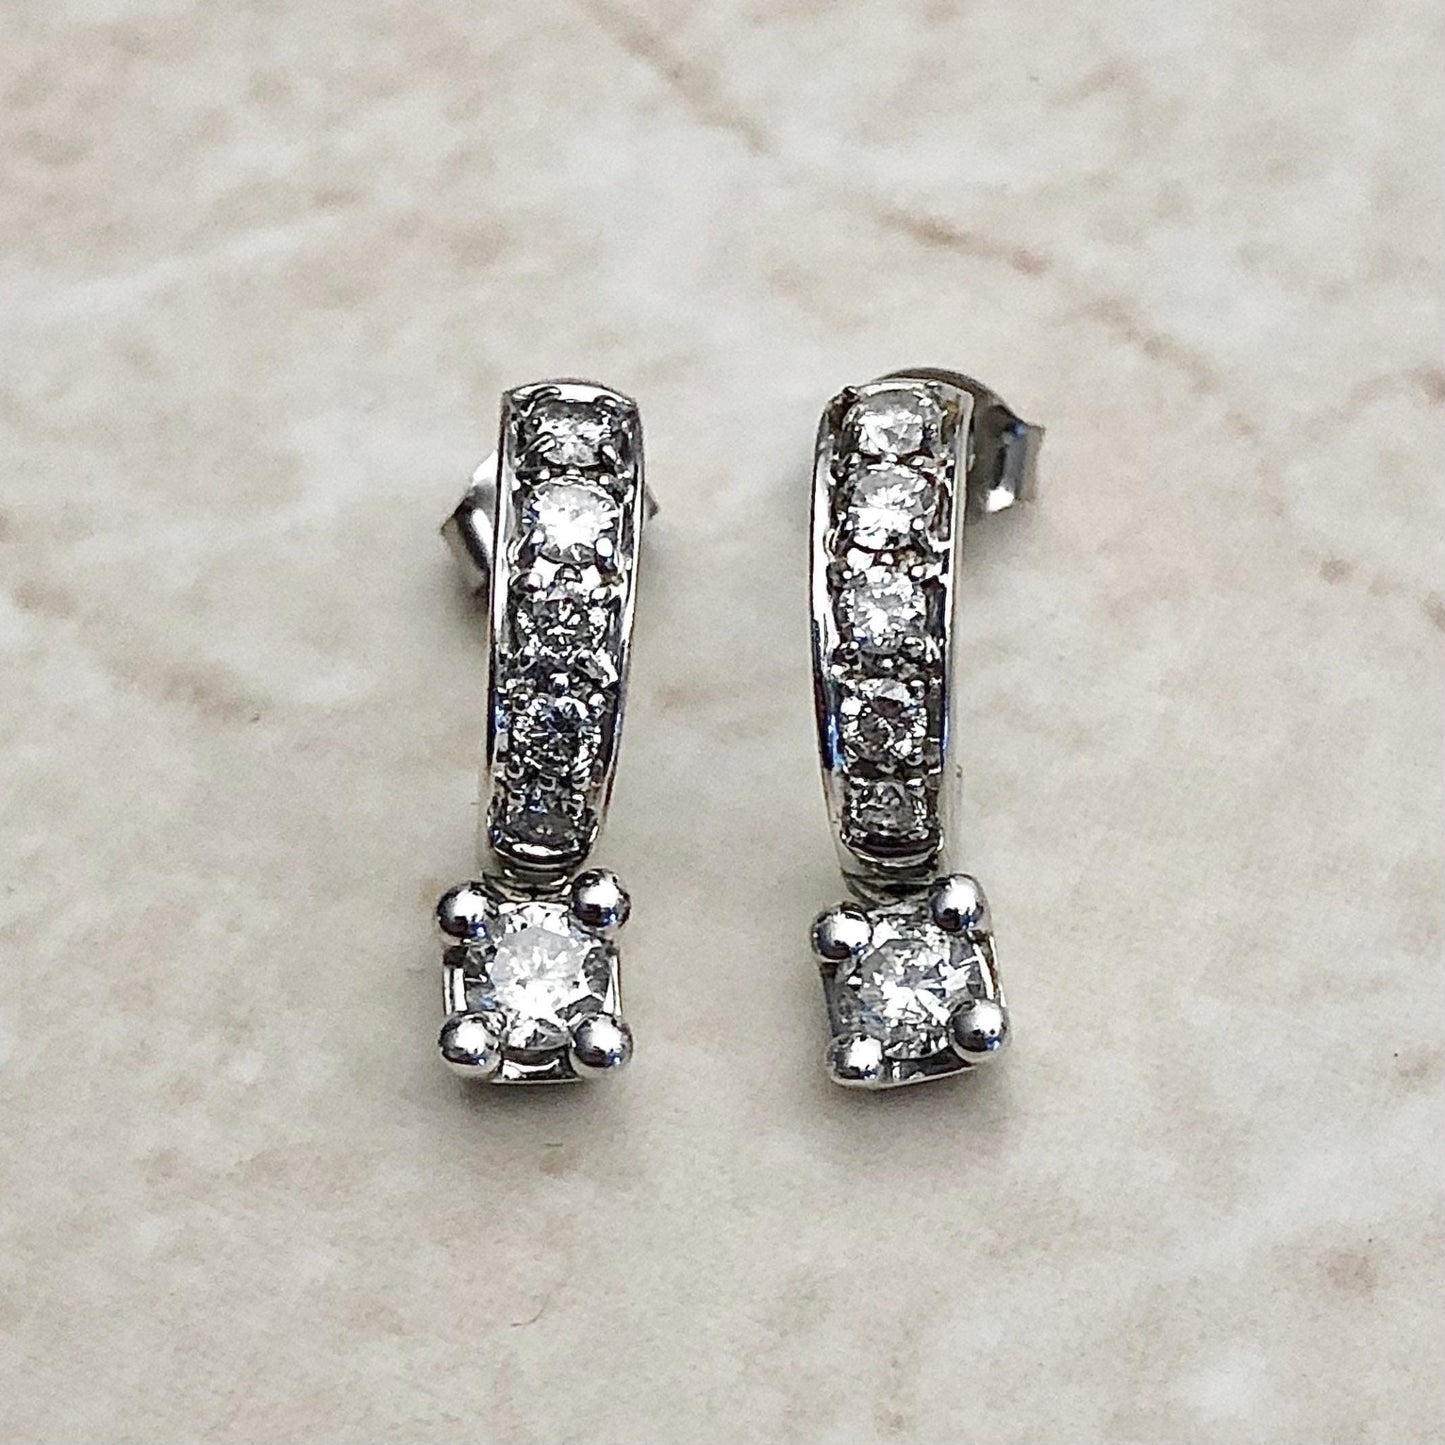 Diamond Drop Earrings 0.80 CTTW - 14K White Gold - April Birthstone - Diamond Earrings - Bridal Wedding Earrings